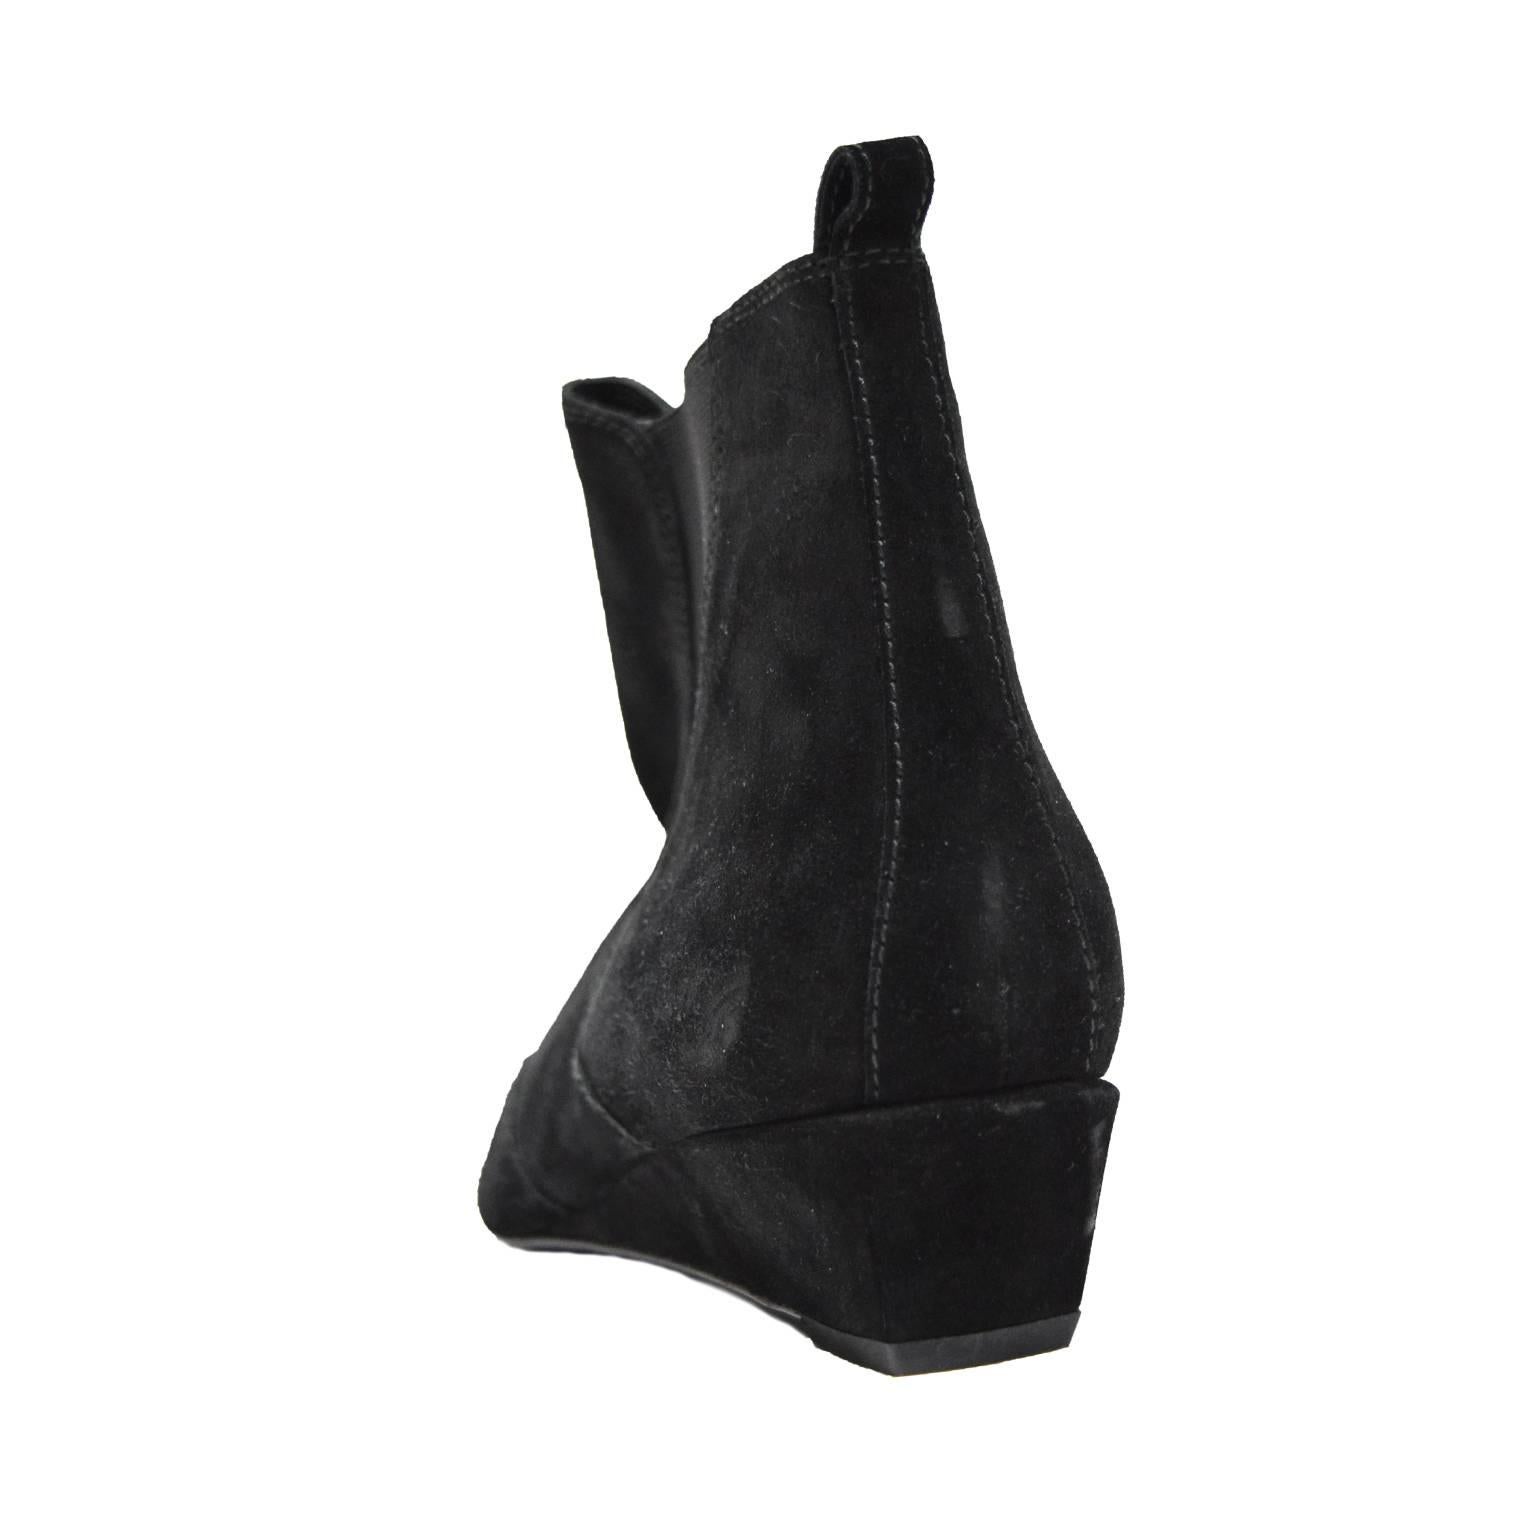 Stuart Weitzman Covering Slip-On Black Shoe-Bootie In Excellent Condition For Sale In Henrico, VA